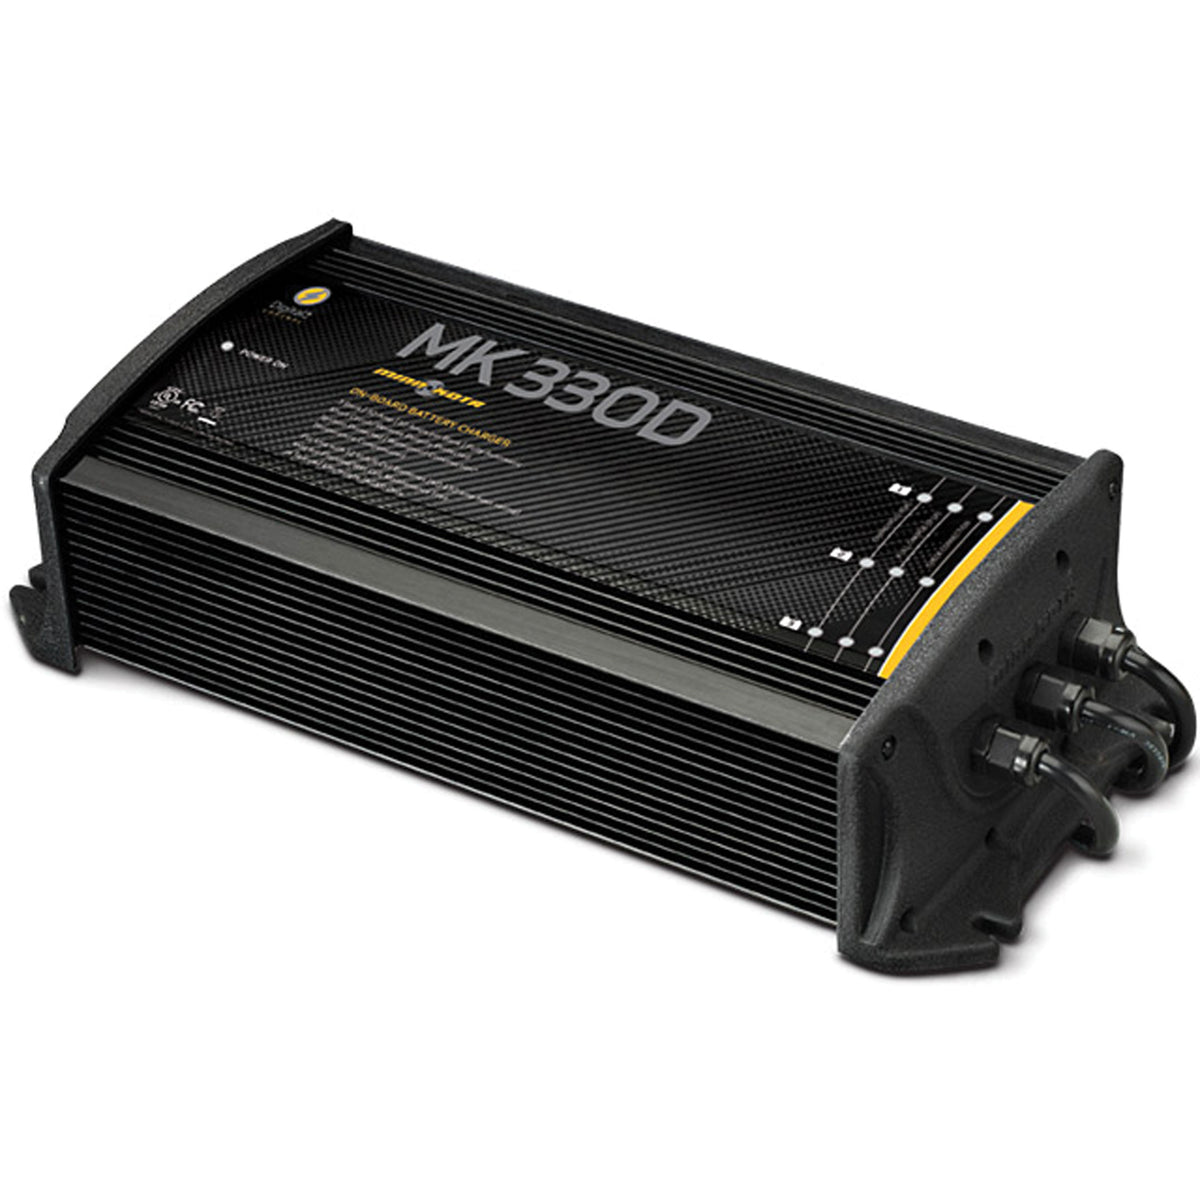 Minn Kota 1823305 Digital On-Board Marine Battery Charger - 3 Bank / 10 Amps